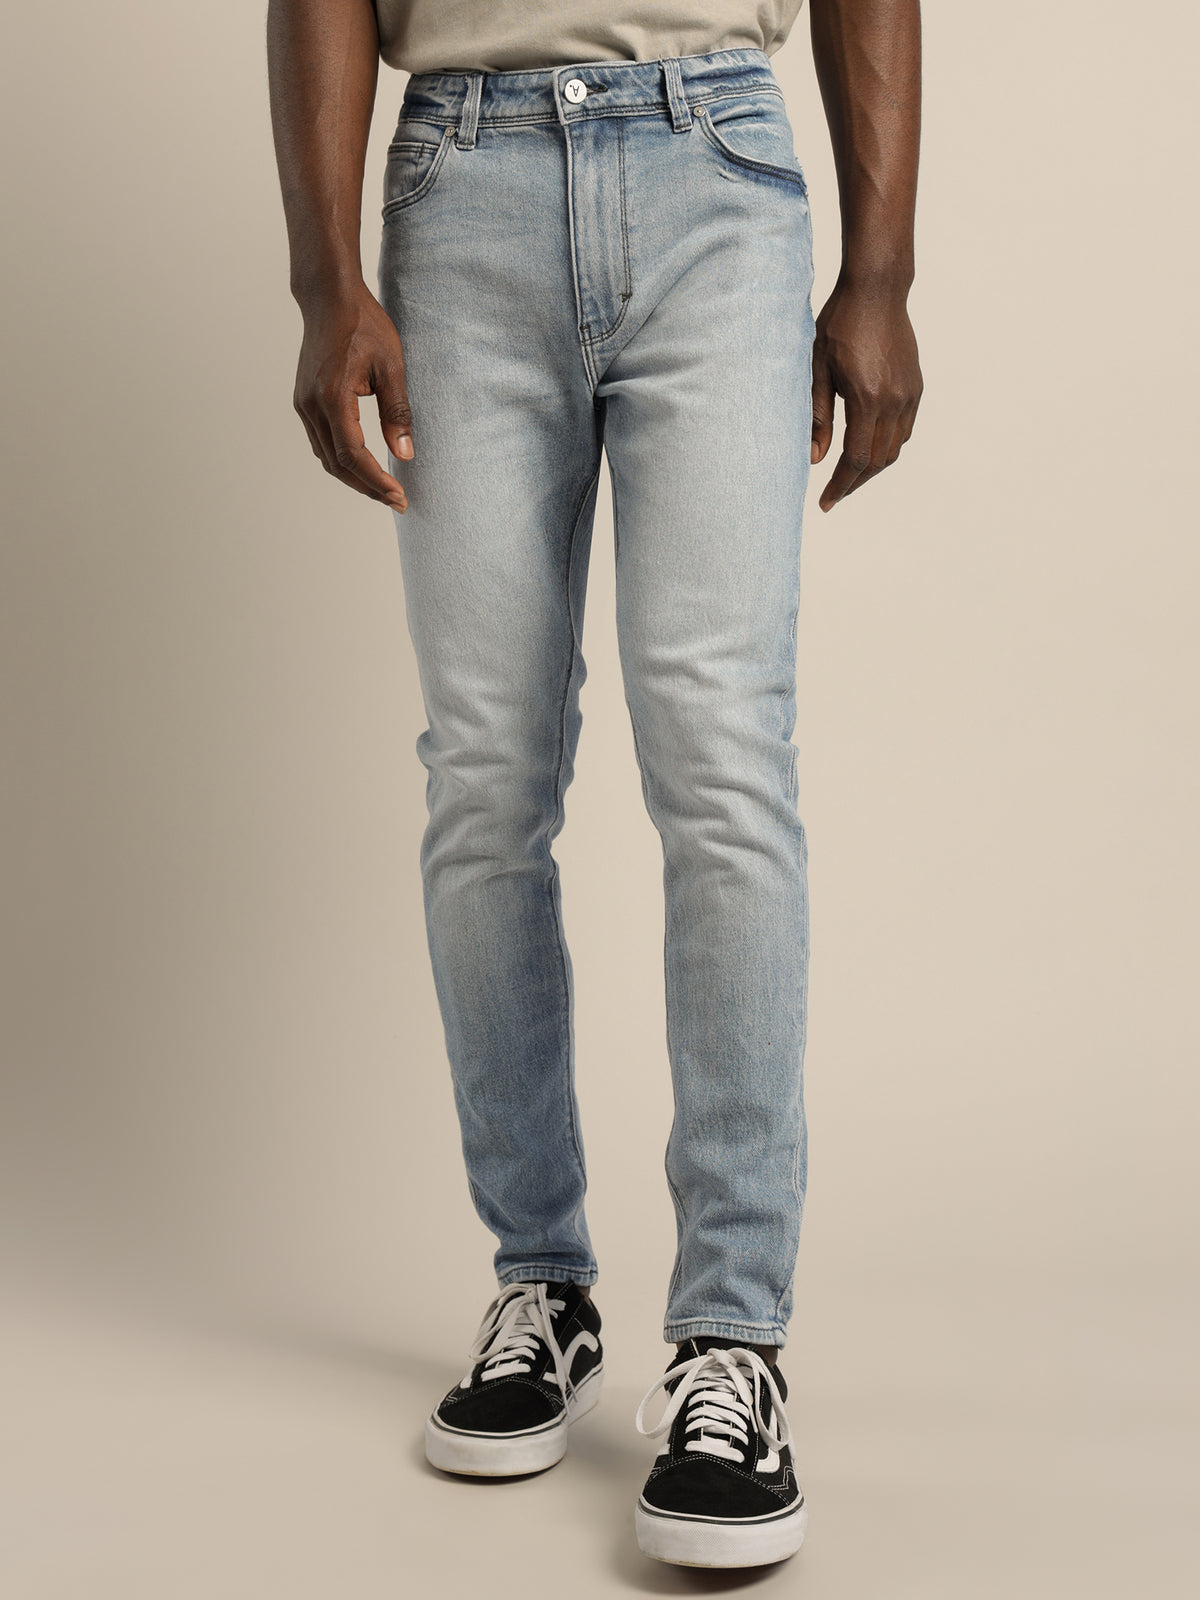 A Dropped Skinny Jeans in Heist Blue